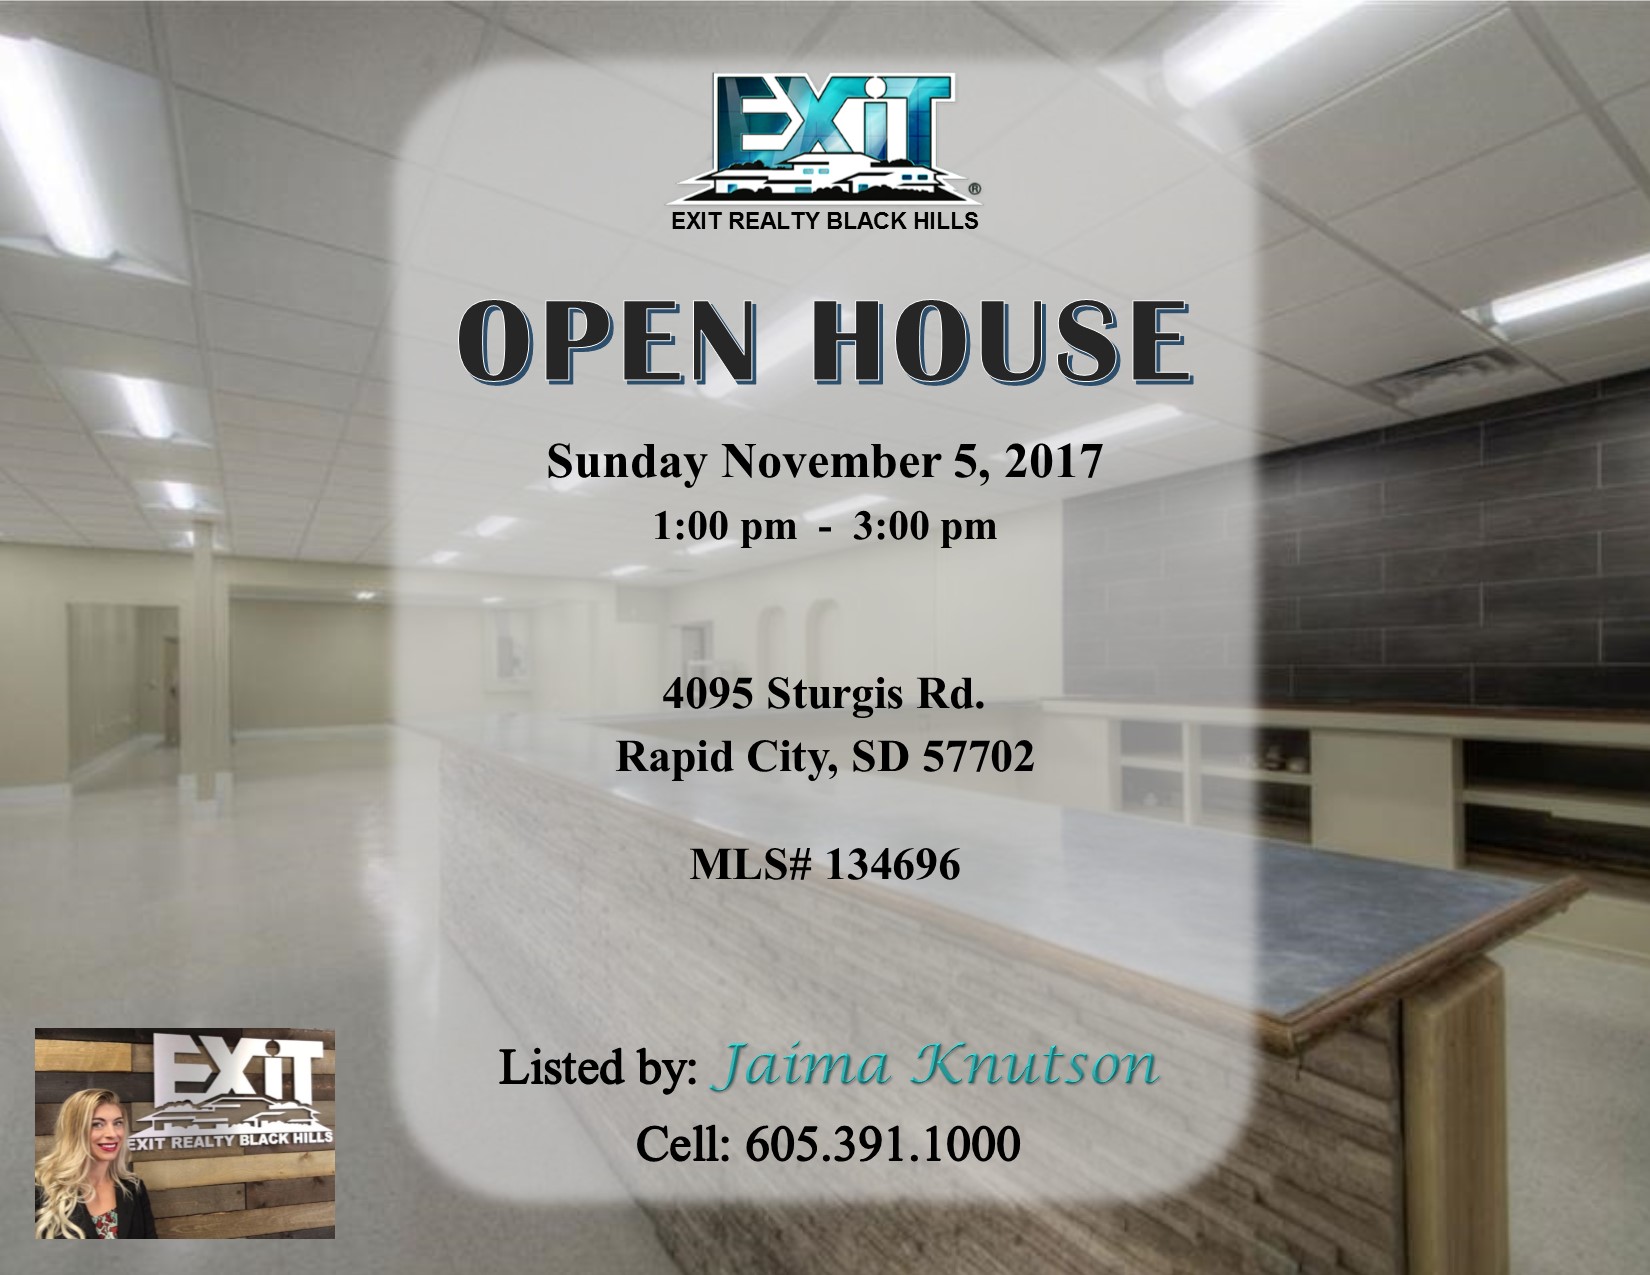 Open House Sunday November 5, 2017